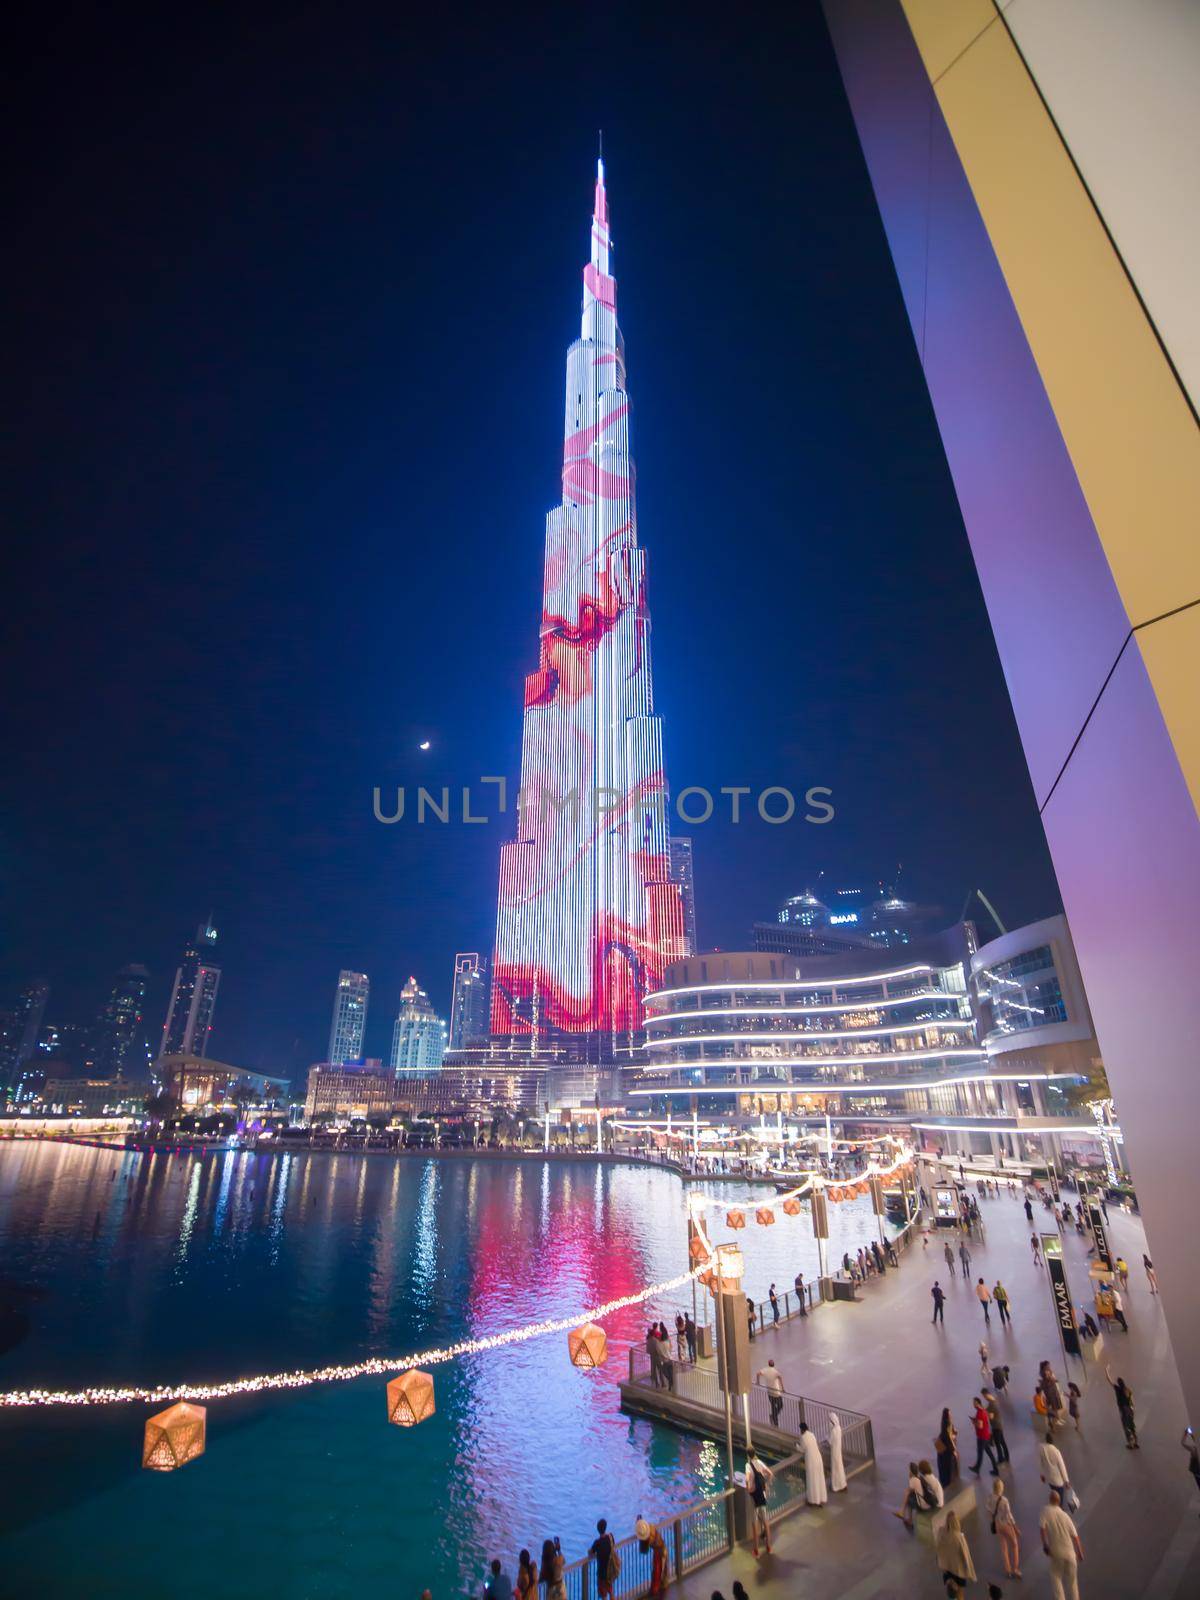 Square of Dubai fountains with illuminations of the Khalifa Tower